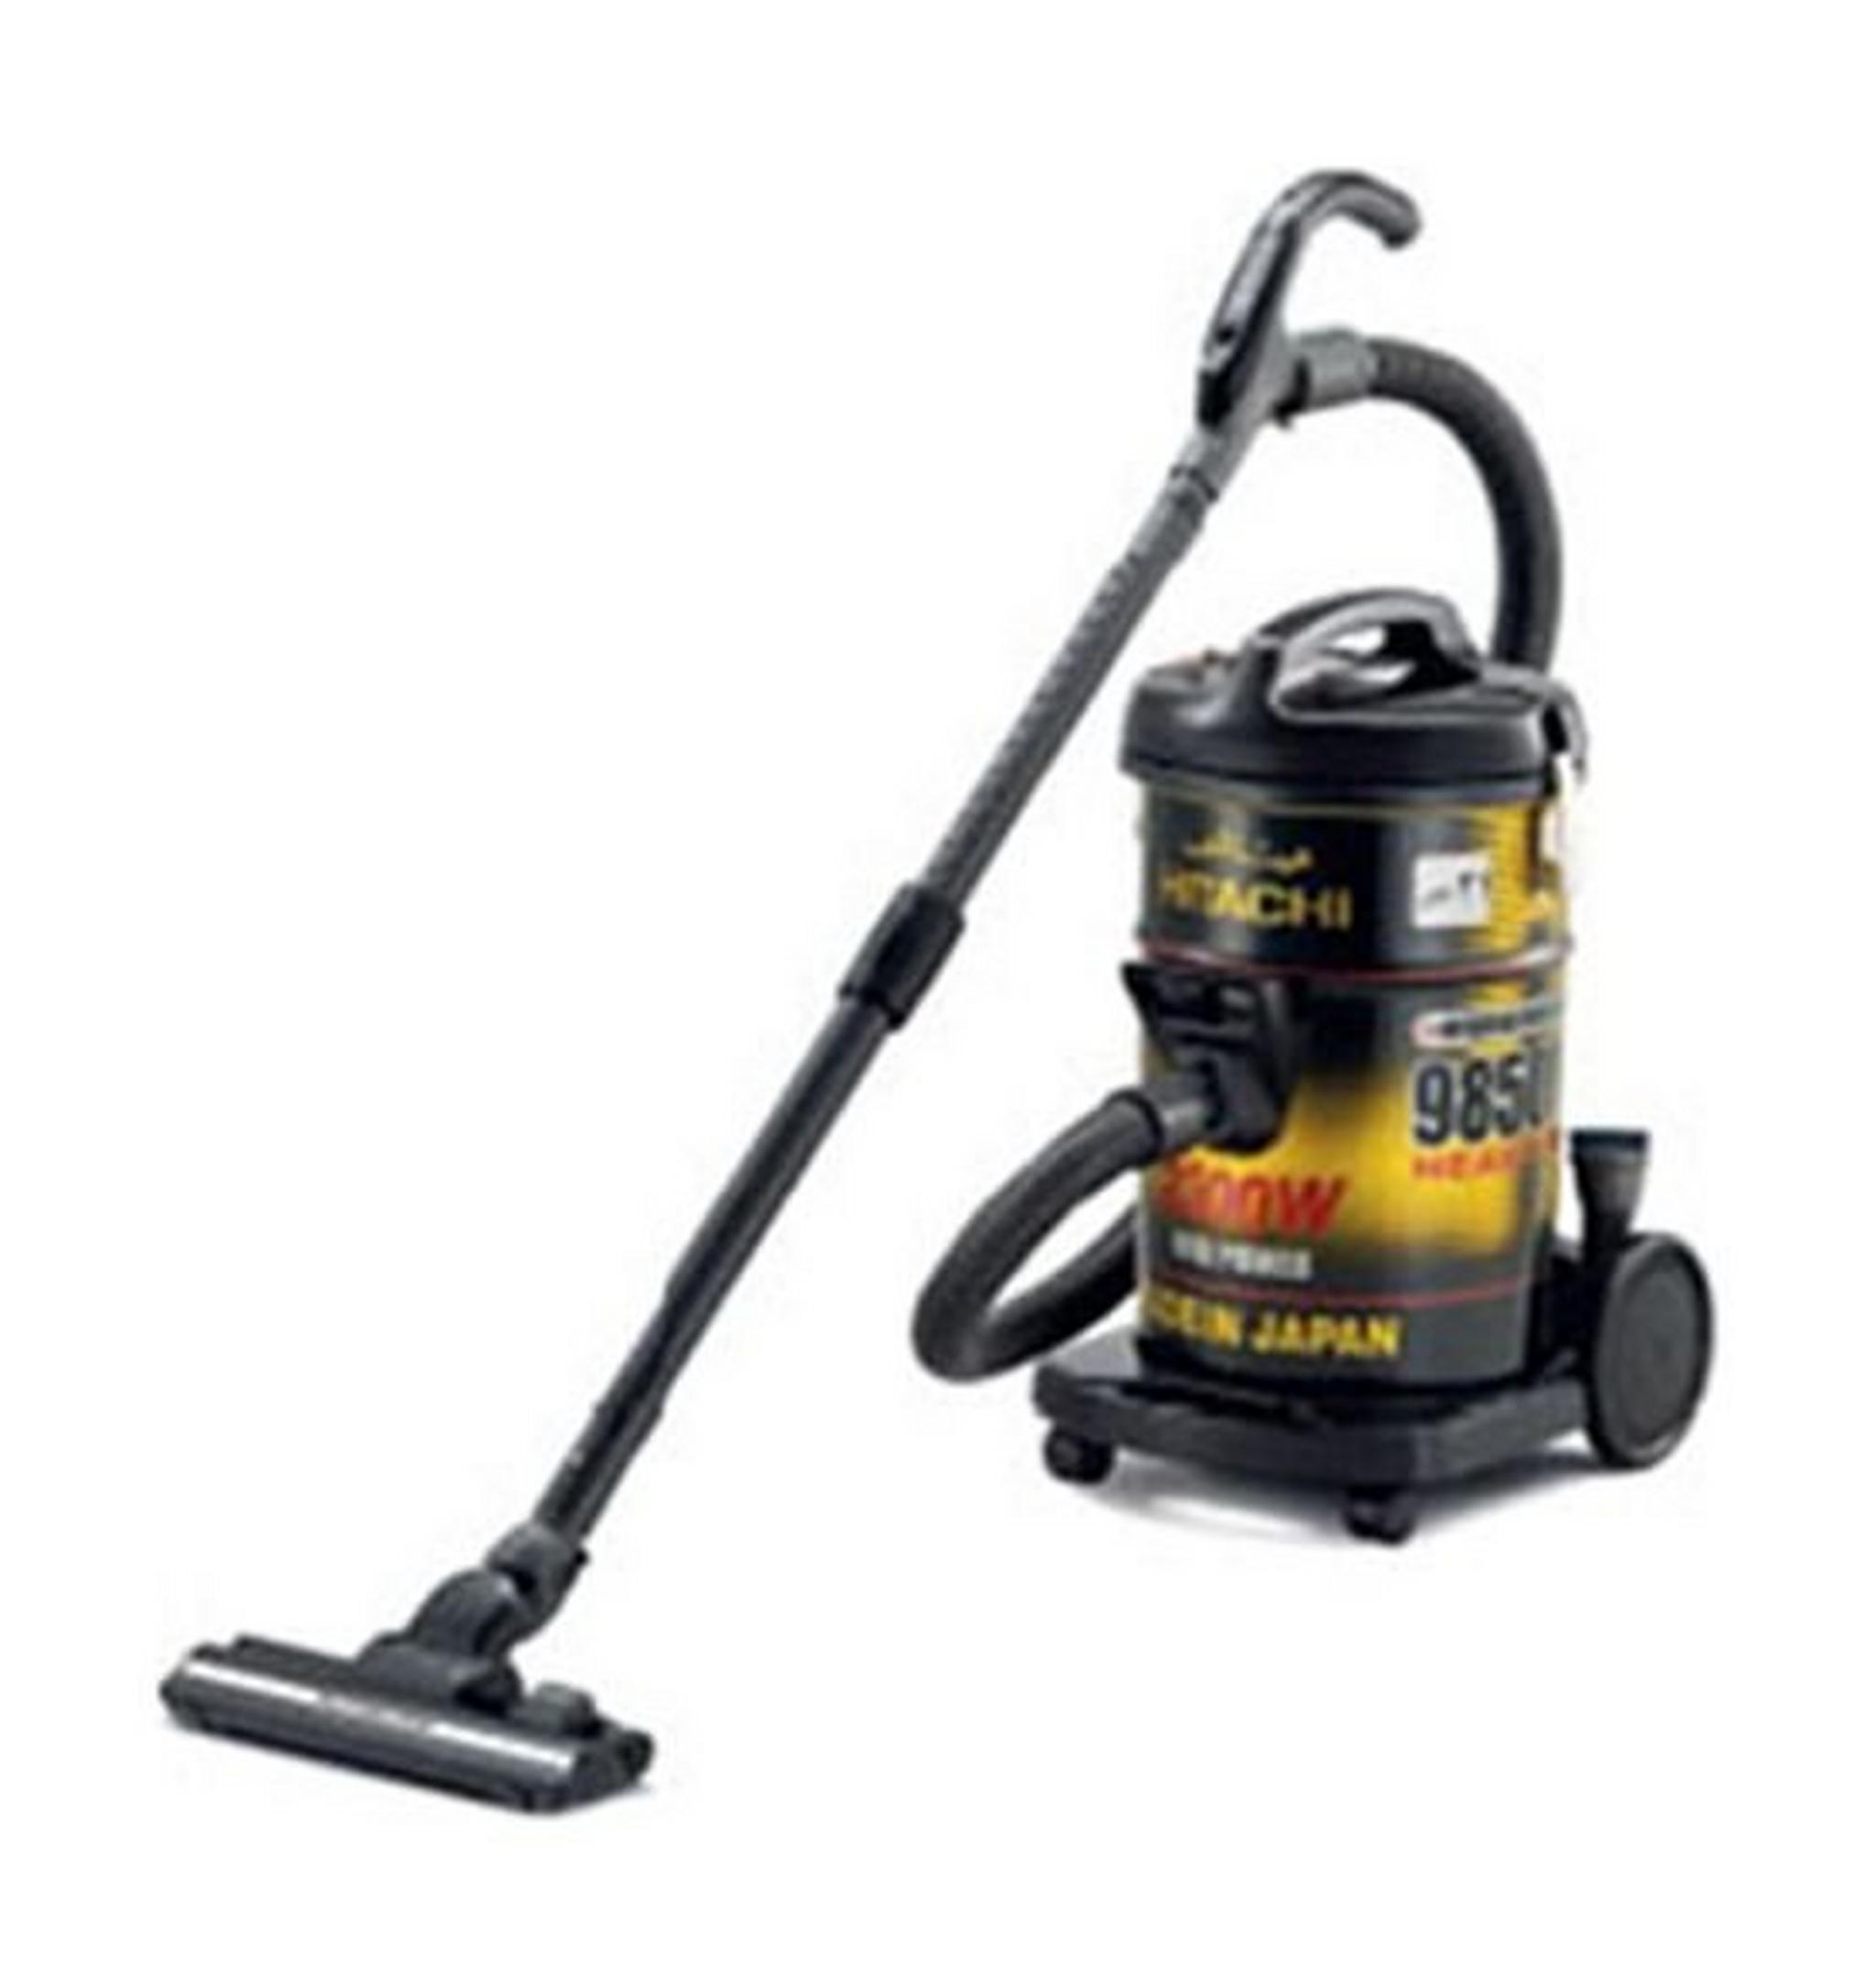 Hitachi 2300W 21L Drum Vacuum Cleaner with Remote (CV-9850YRJ) - Black